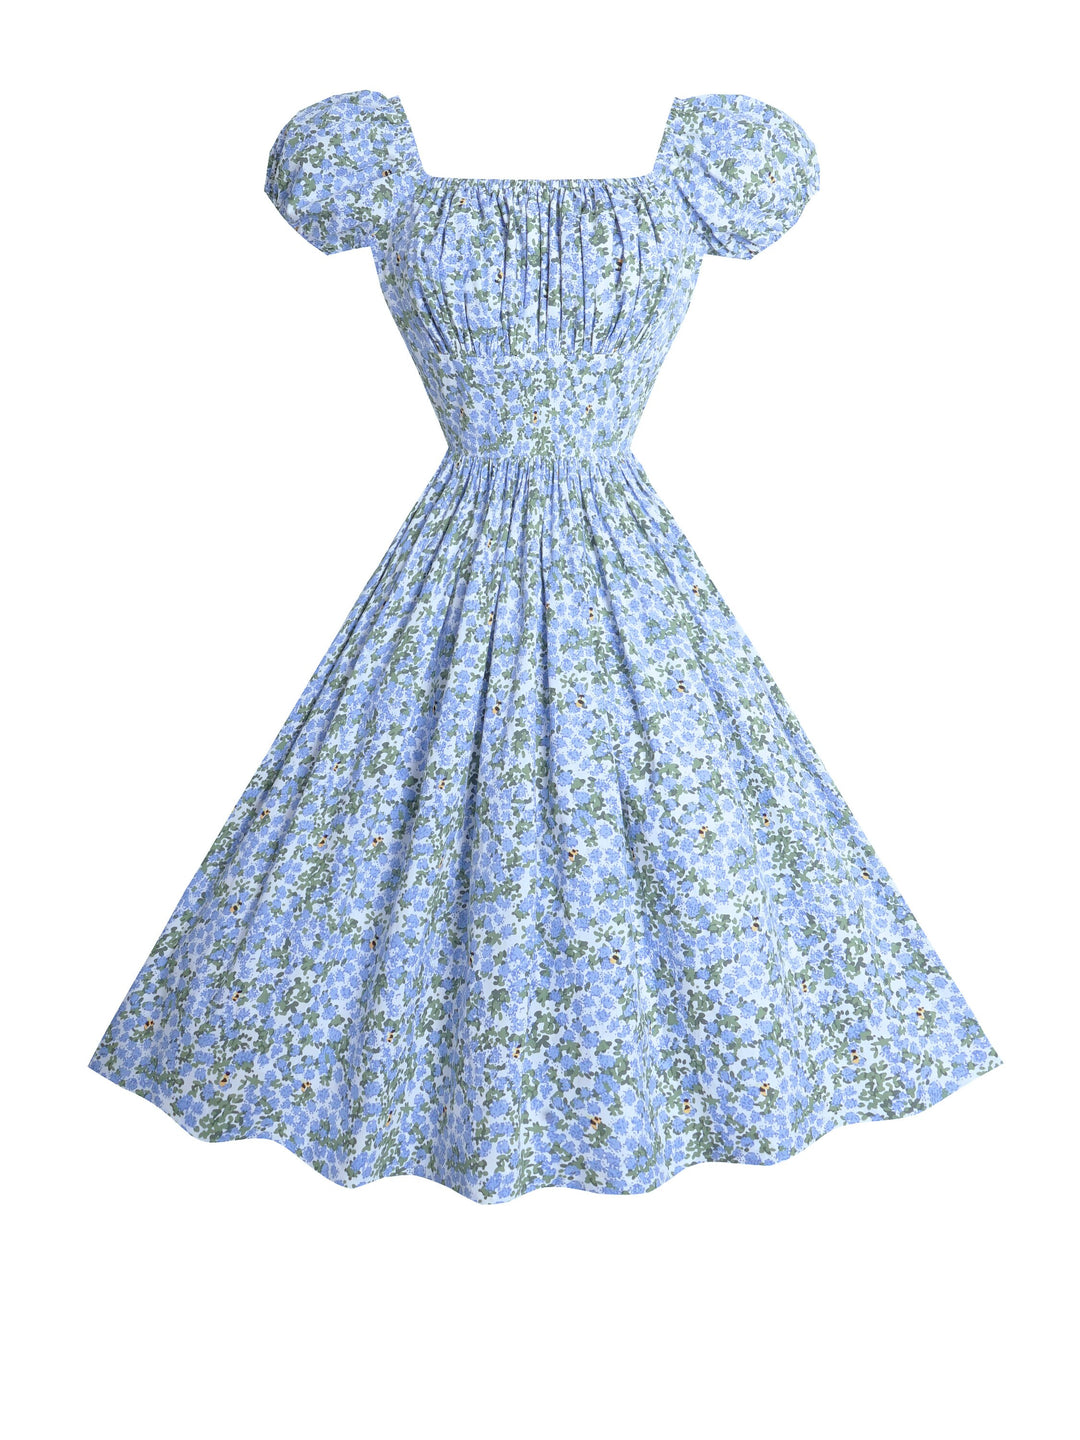 MTO - Loretta Dress in "Beeloved Blooms"